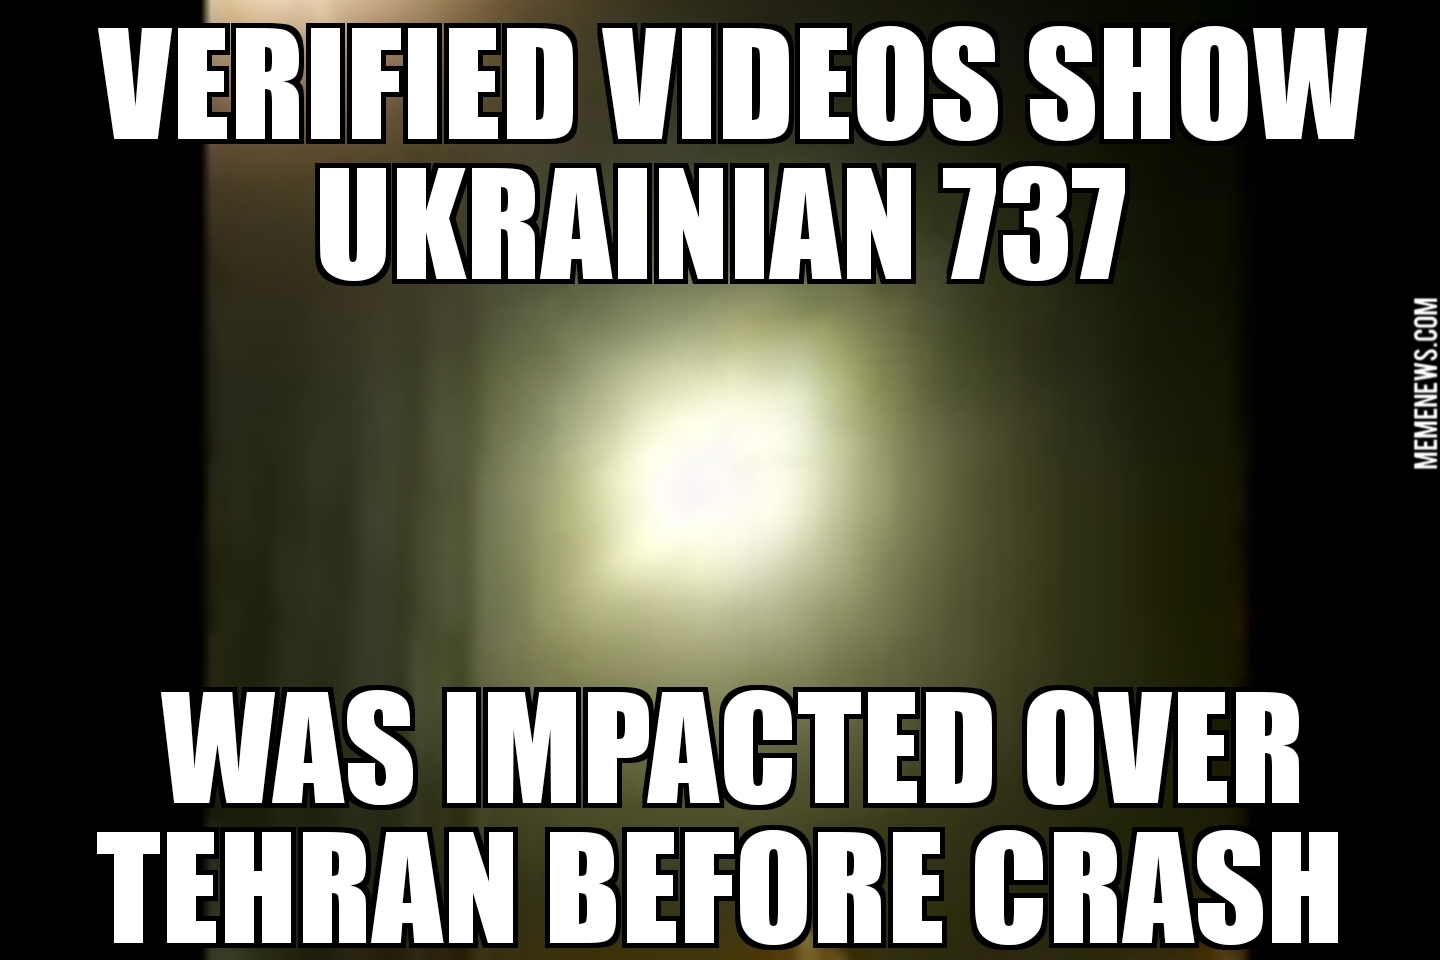 Videos show Ukrainian 737 impacted before crash